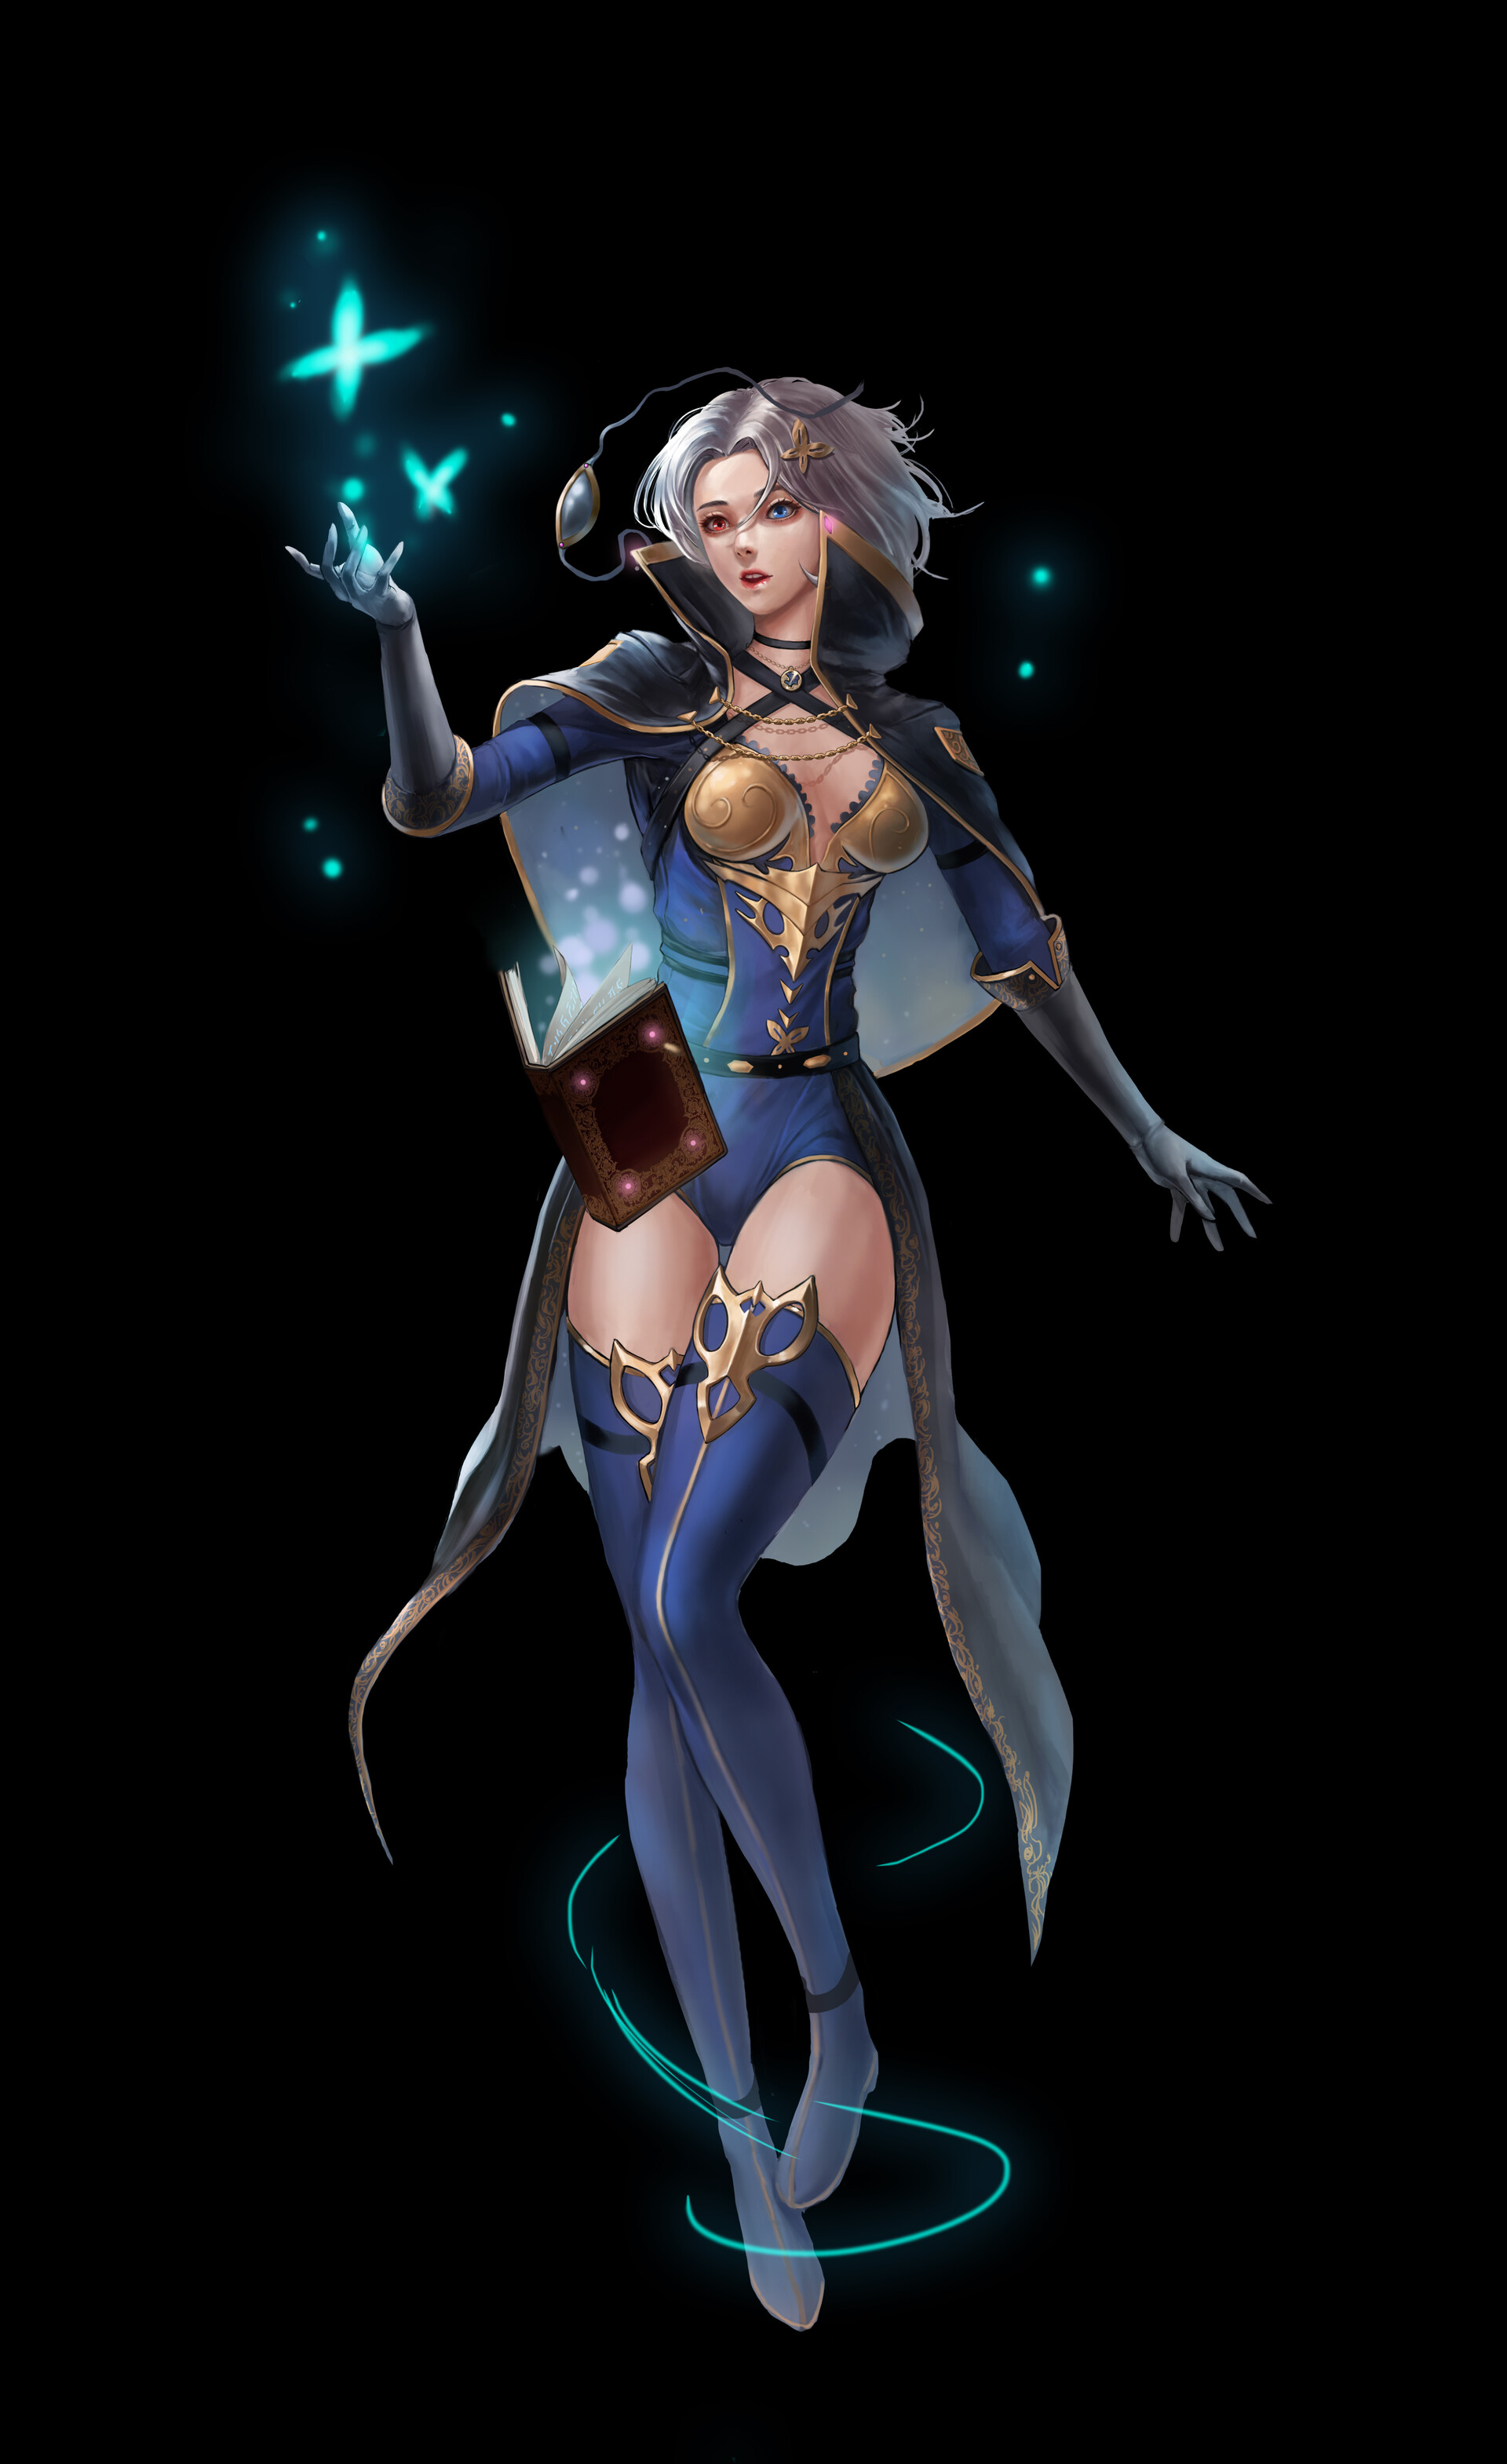 ArtStation - Pixel Female Mage Character Concept